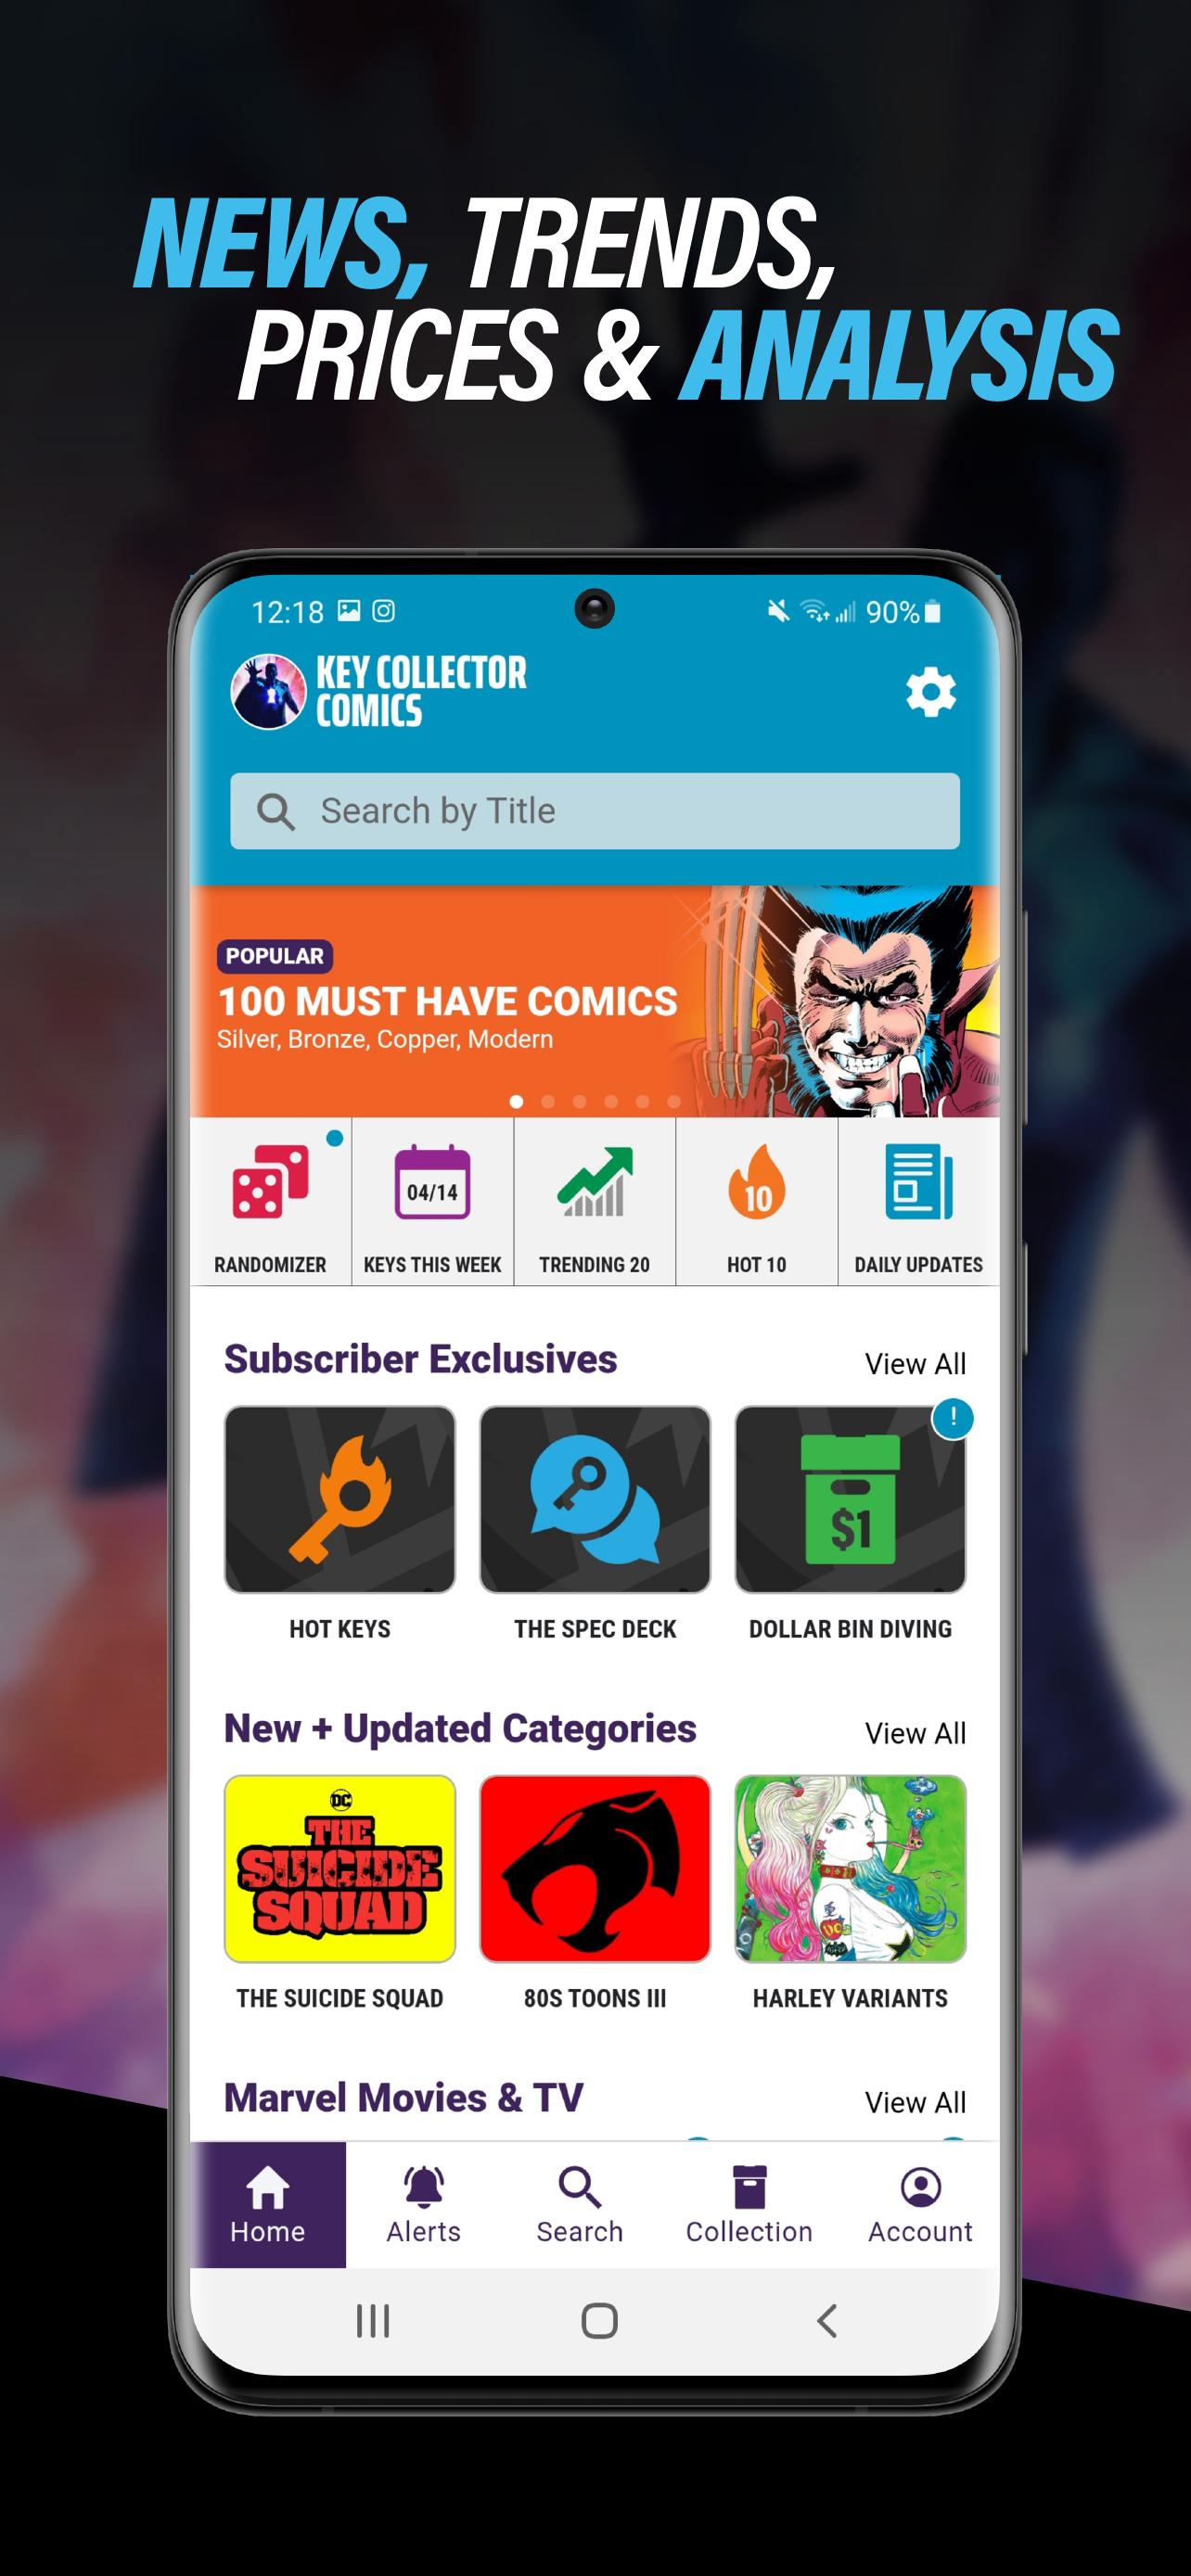 Key Collector Comics Database & Price Guide App 3.2.3 Screenshot 2